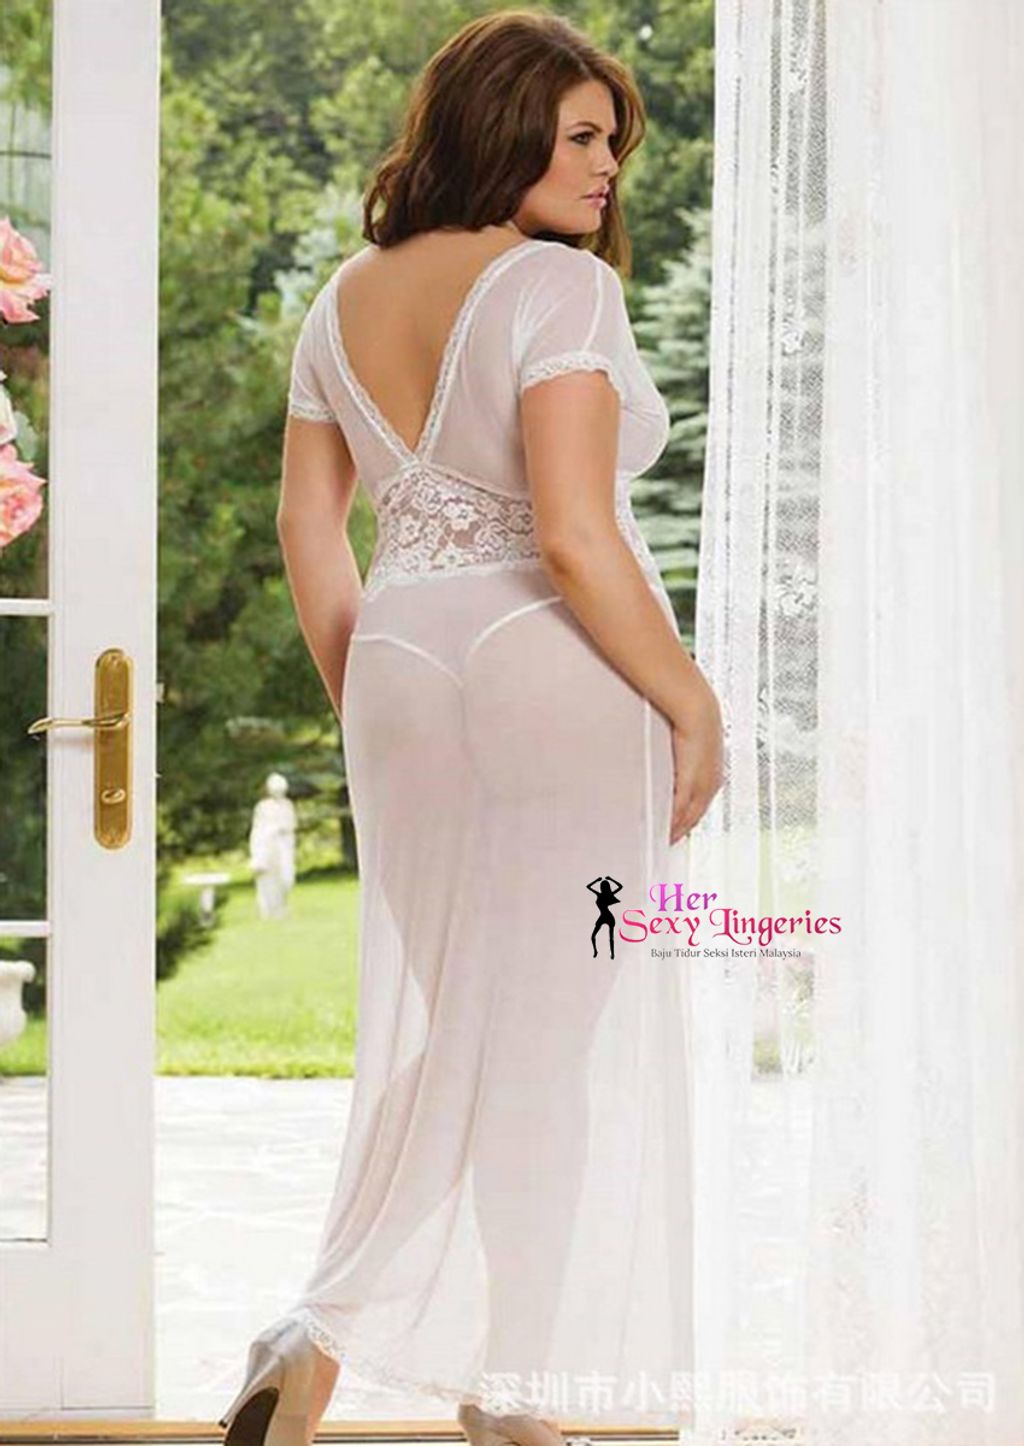 Plus Size Lace Long Dress Nightwear Lingeries Sexy. (White) PYS30WH 1.jpg